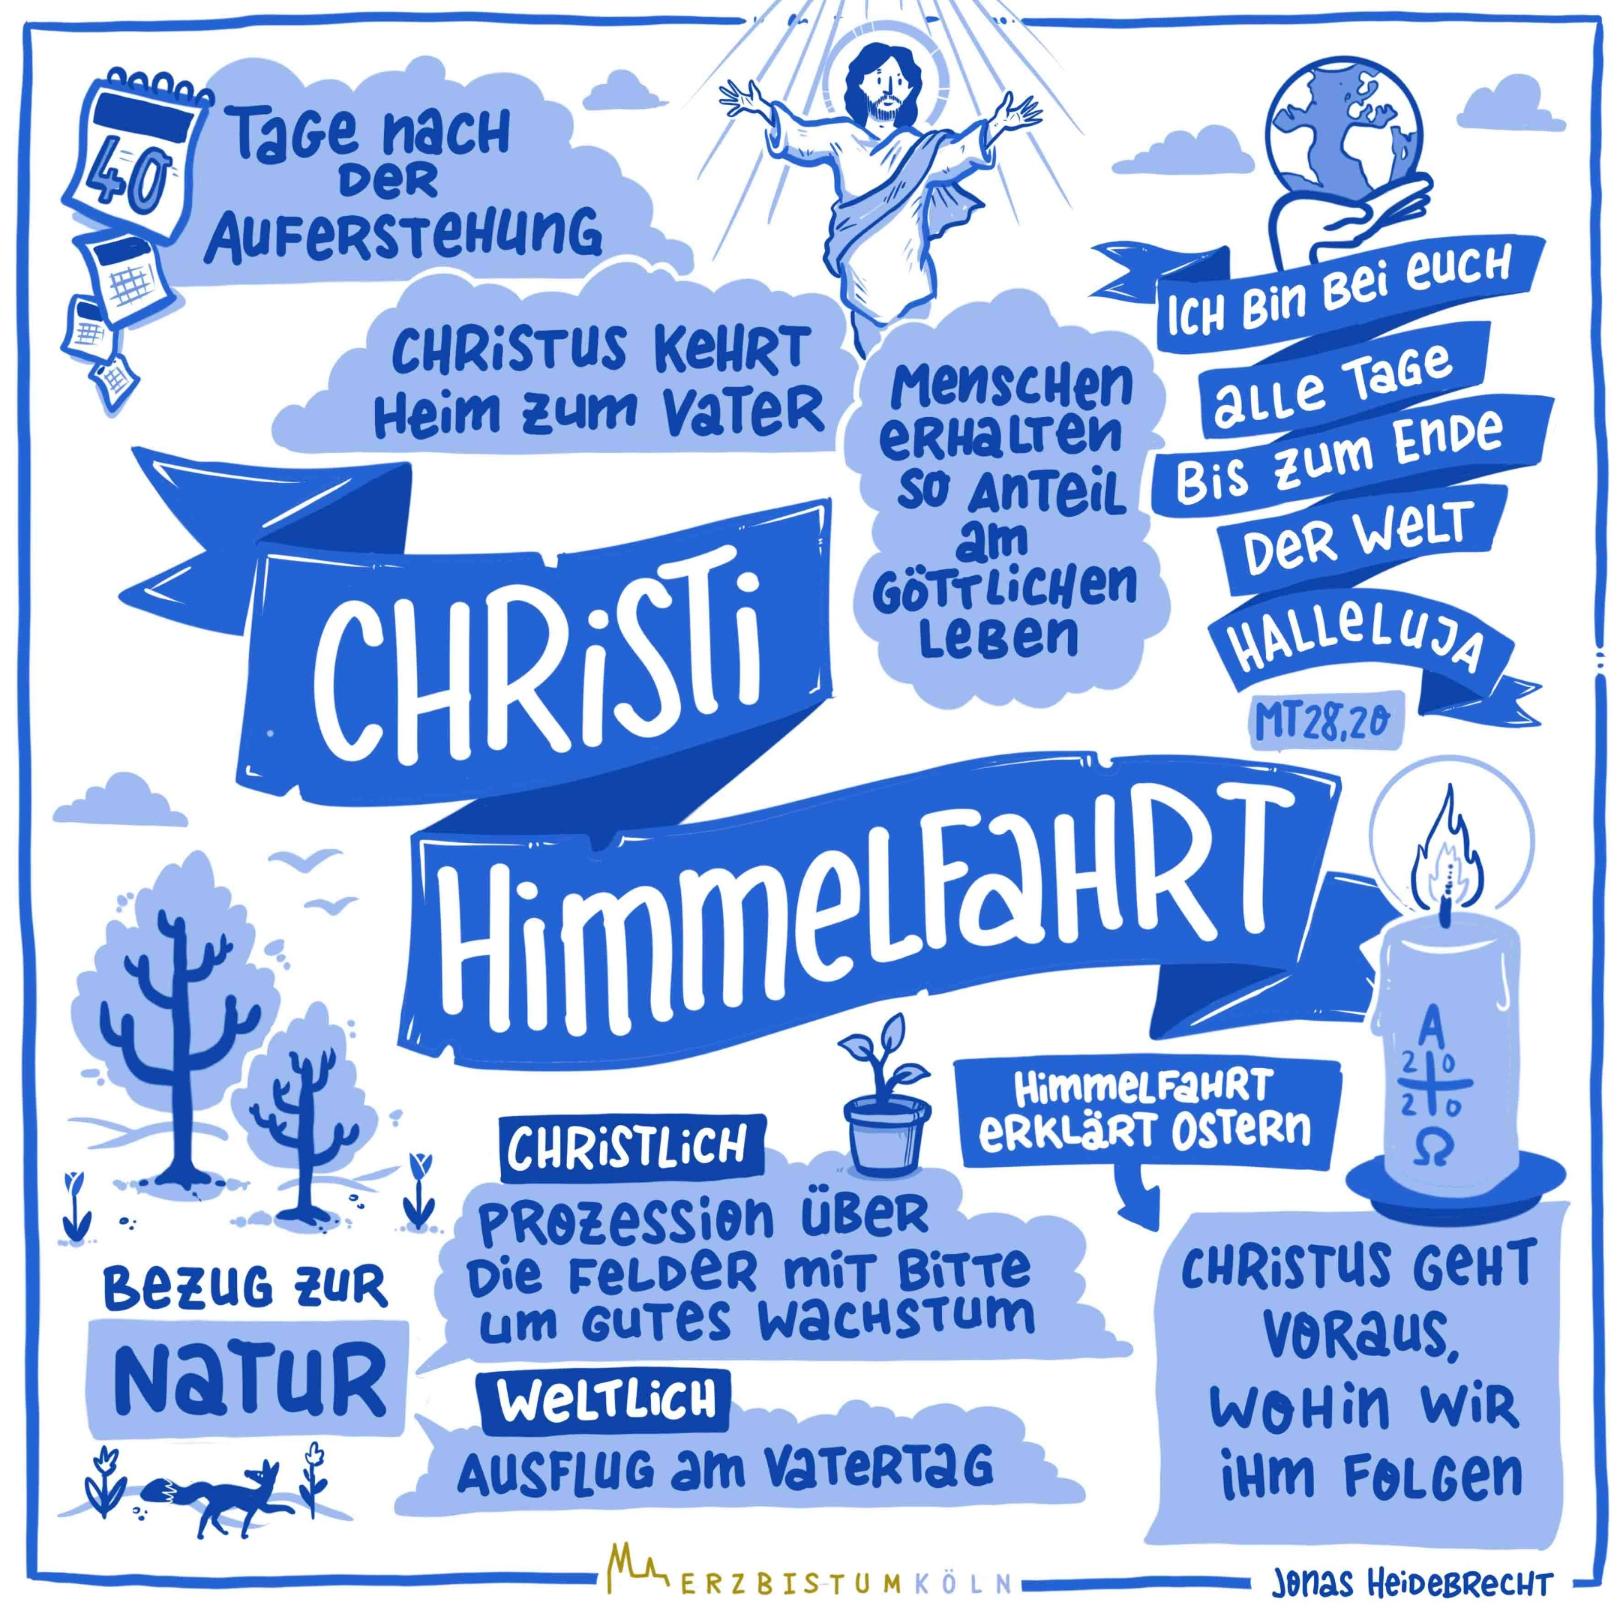 Christi Himmelfahrt - schnell erklärt (c) Heidebrecht Frei (Erzbistum Köln) - www.pfarrbriefservice.de